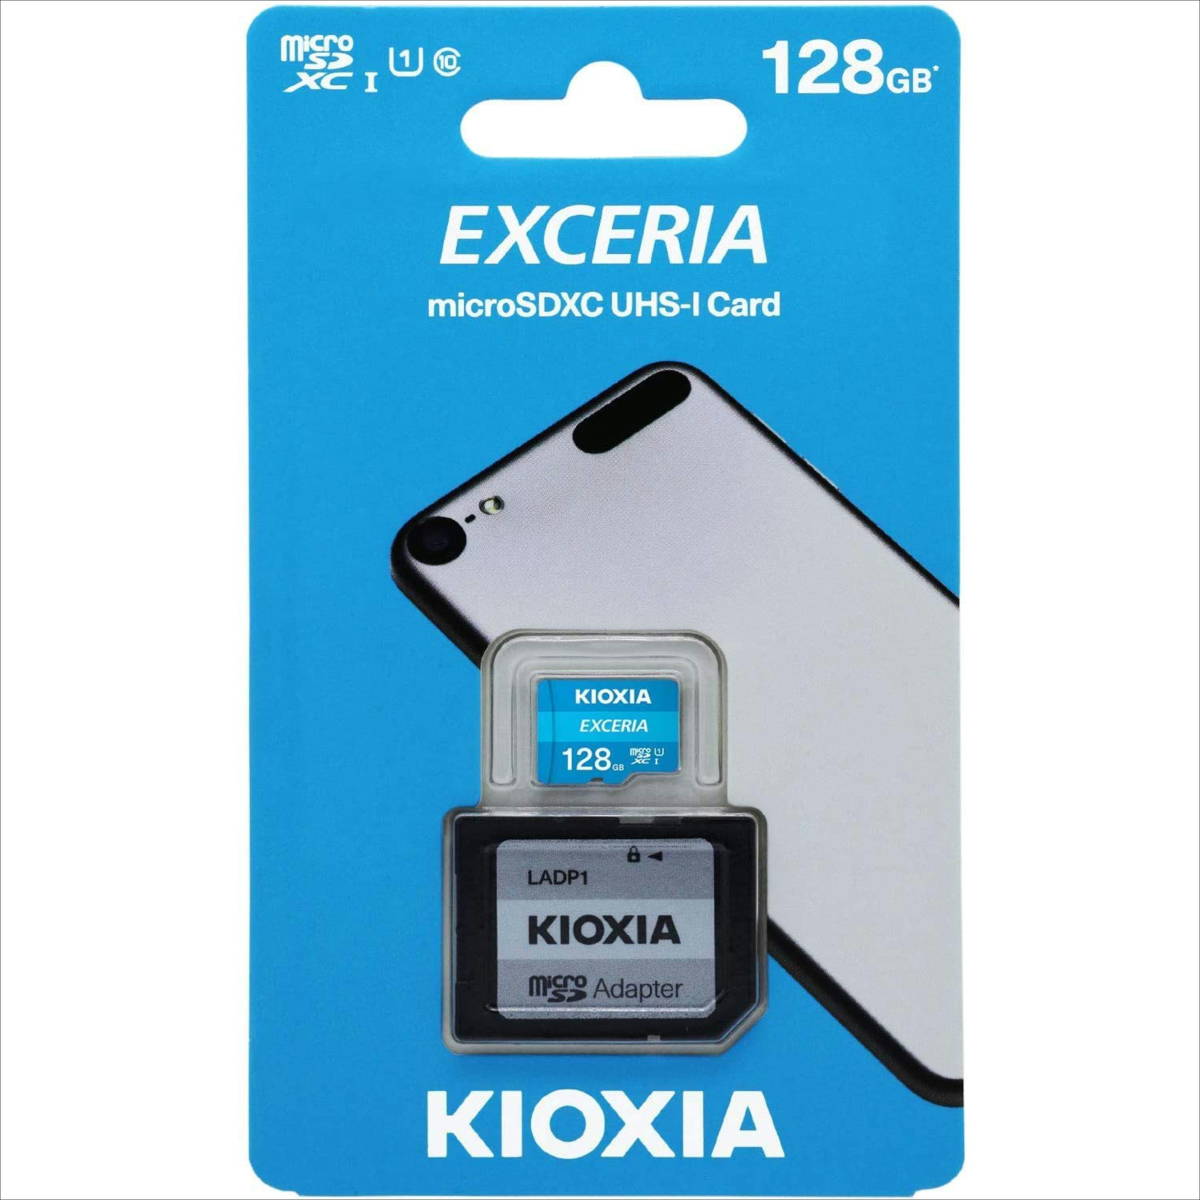 SDXU-D256G EXCERIA PRO SDXCメモリカ-ド 256GB